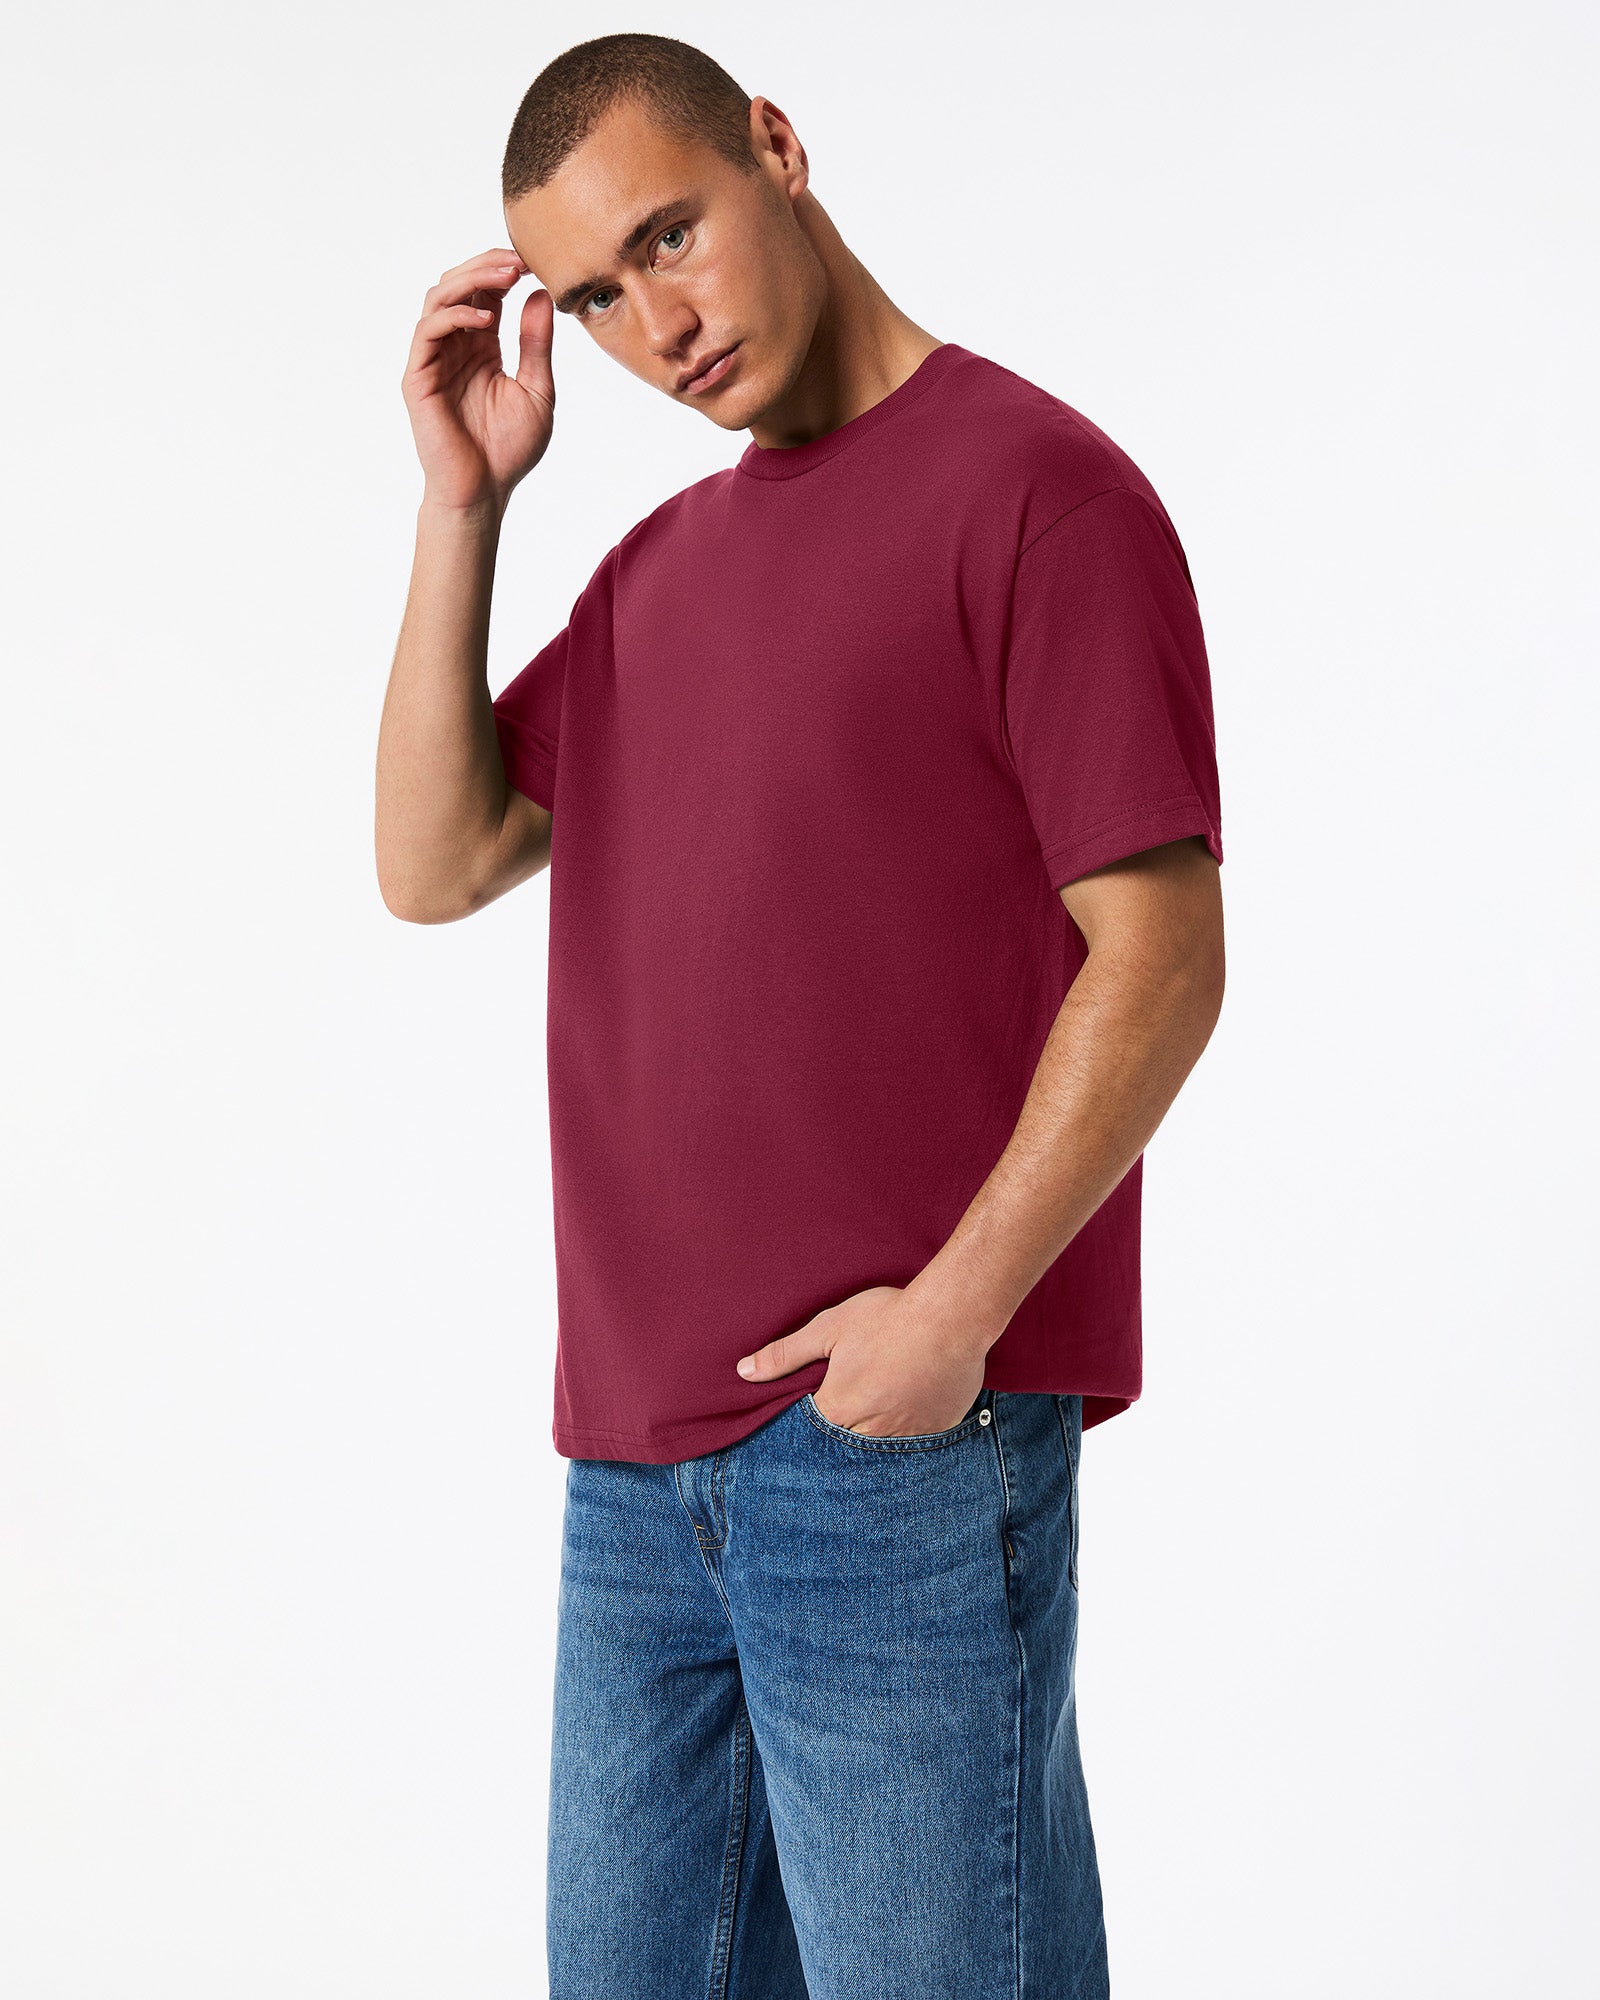 Heavyweight Unisex T-Shirt - Burgundy